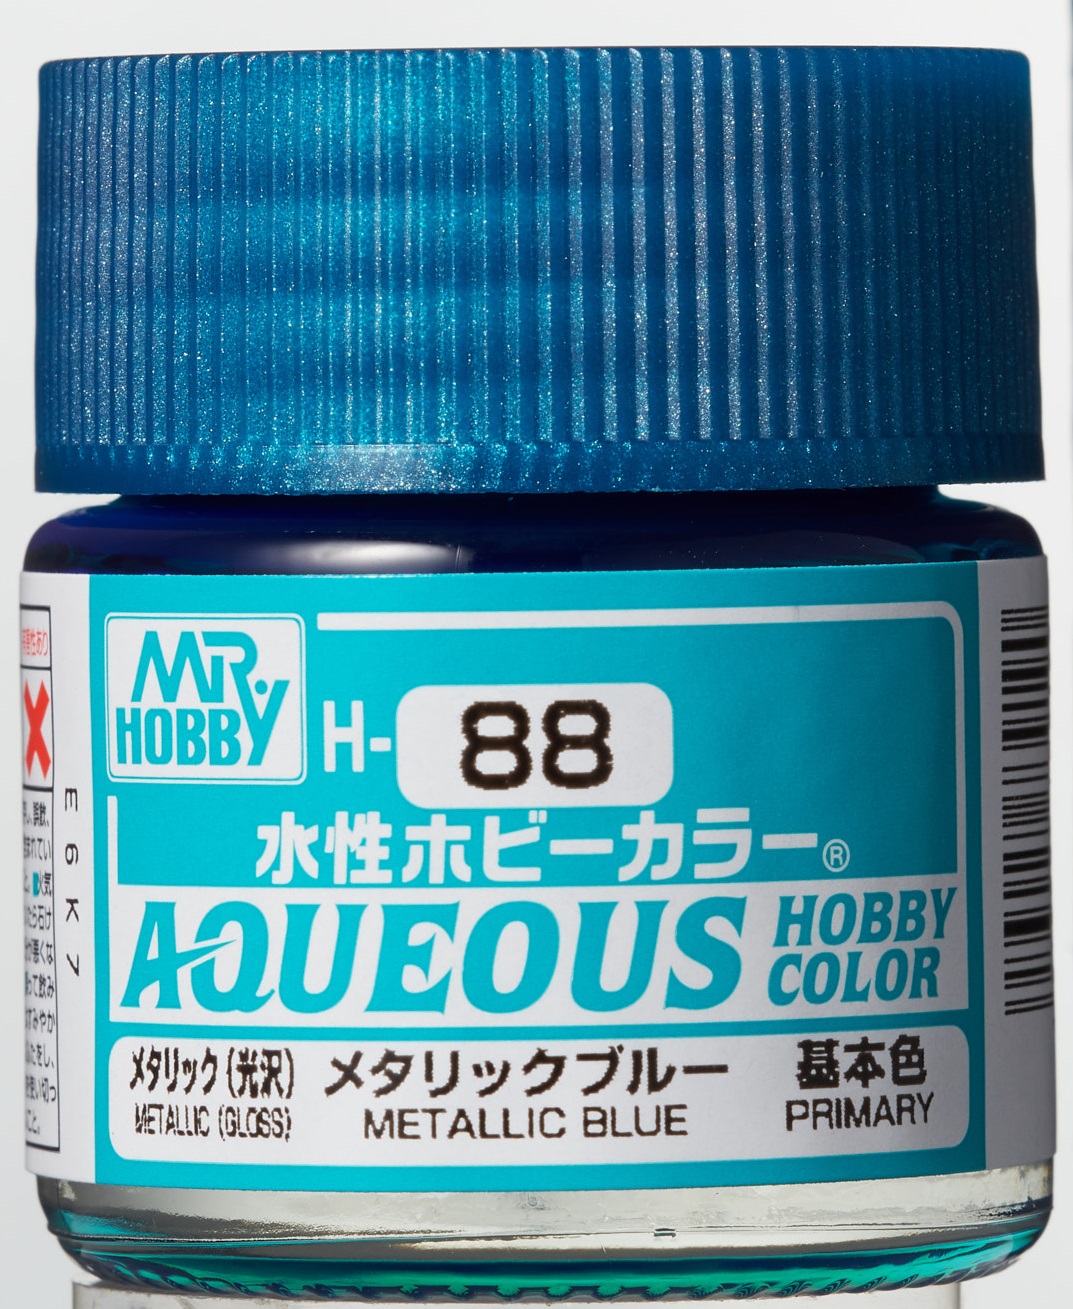 Mr. Aqueous Hobby Color - Metallic Blue - H88 - Metallic Blau